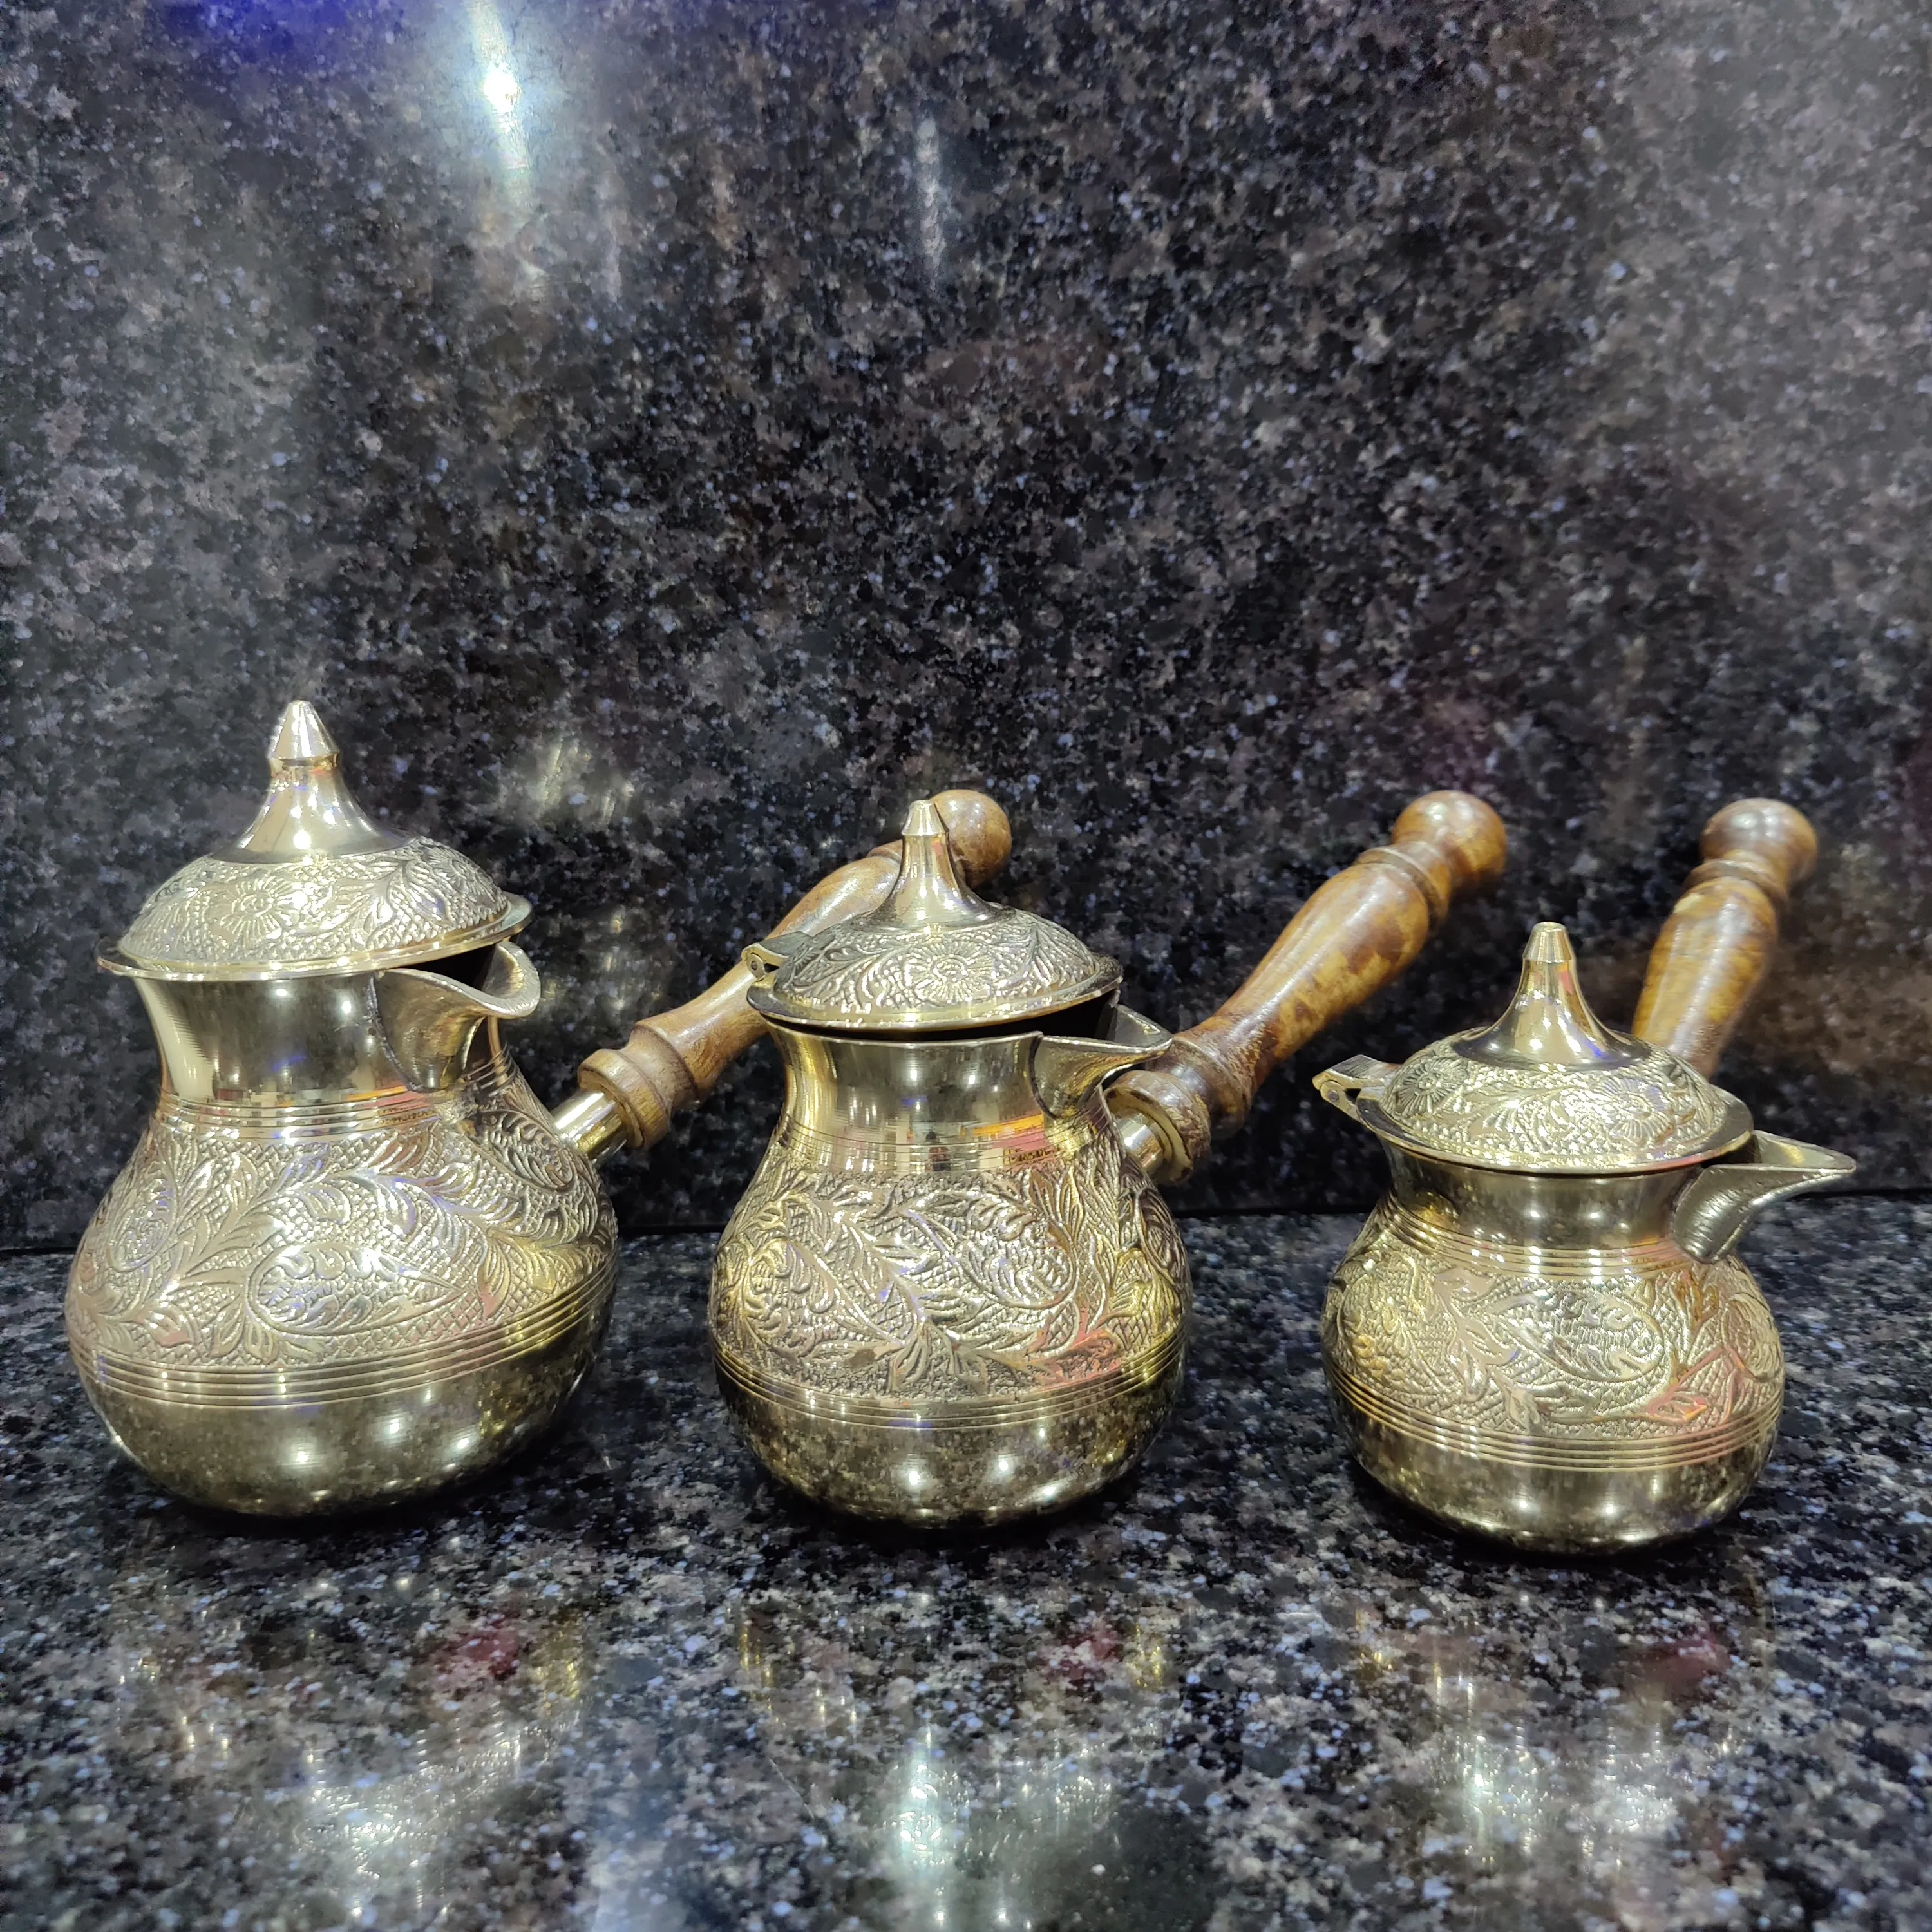 Alim ชุดชาและกาแฟแบบตุรกี, หม้อกาแฟทำจากทองเหลืองบริสุทธิ์พร้อมกาน้ำชาด้ามไม้สำหรับกาแฟอาหรับ